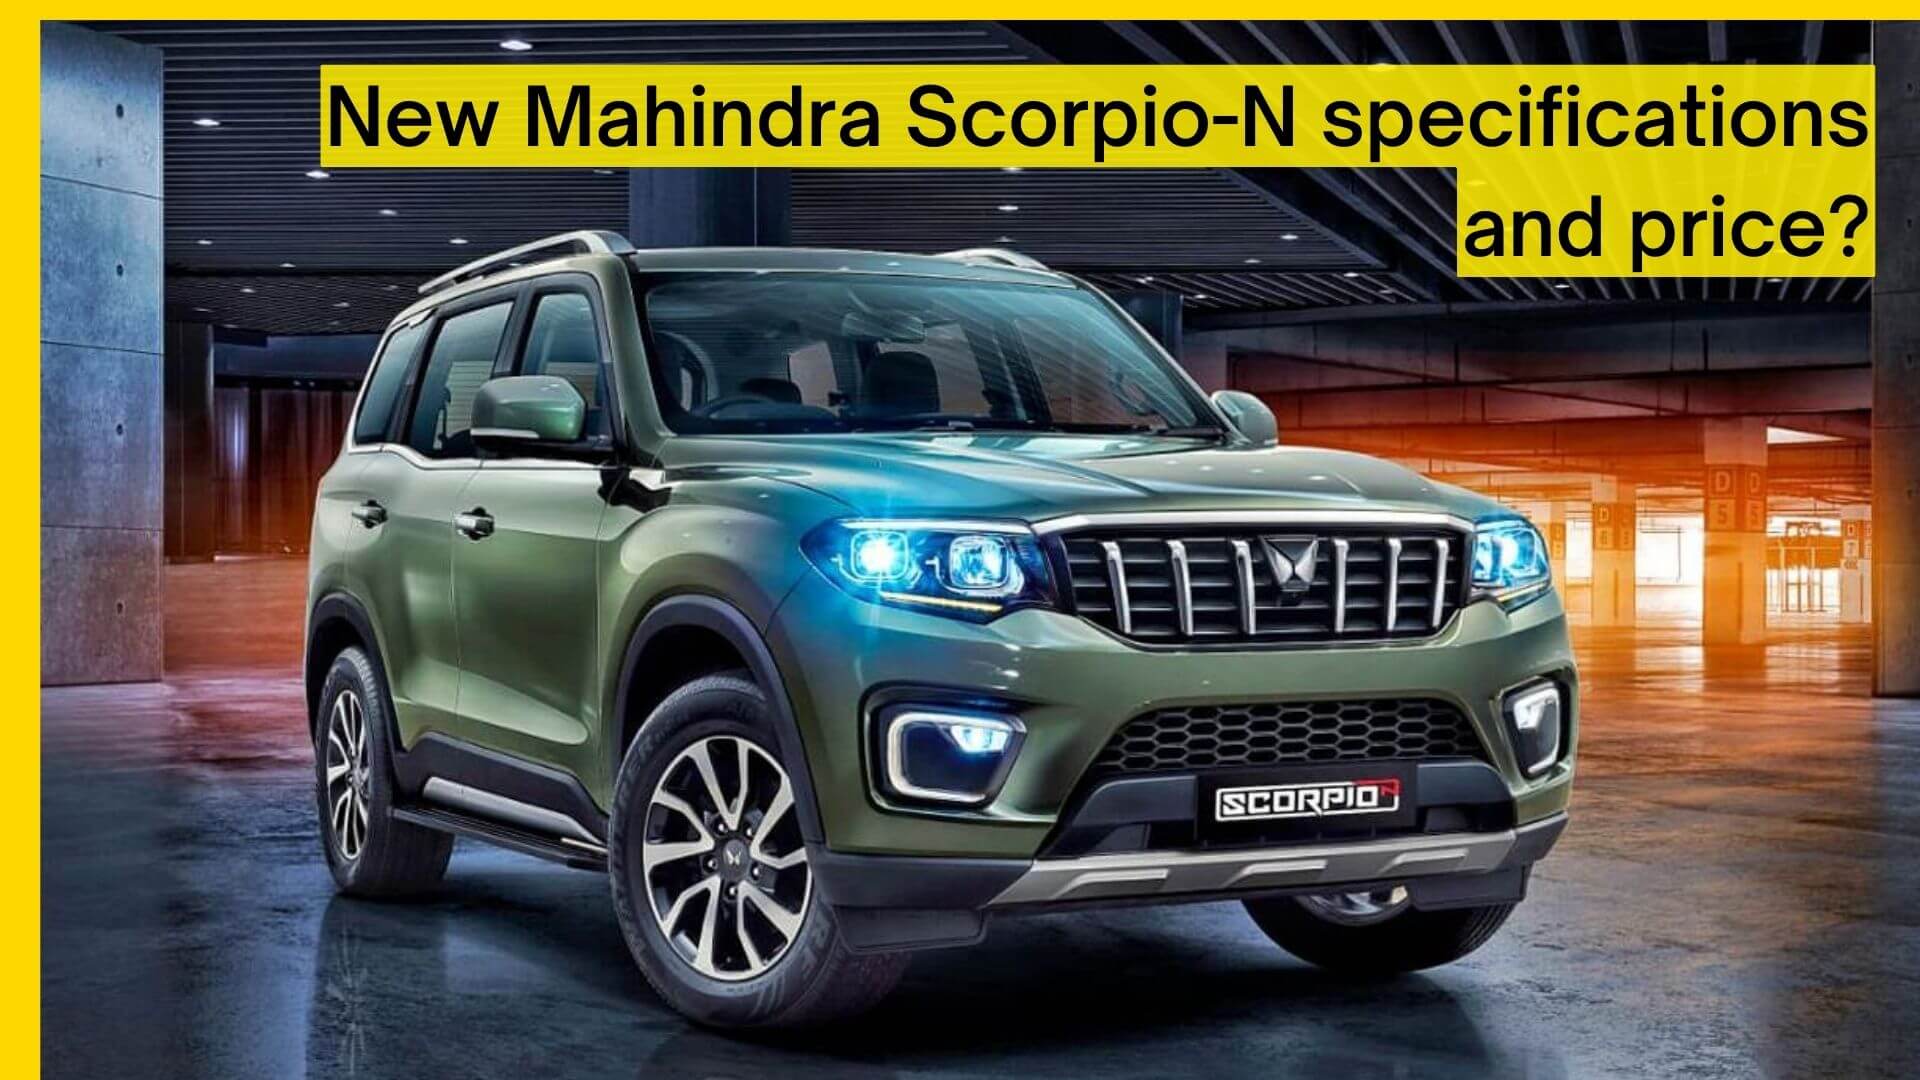 https://carandbike24.com/new-mahindra-scorpio-n-specifications-and-price/